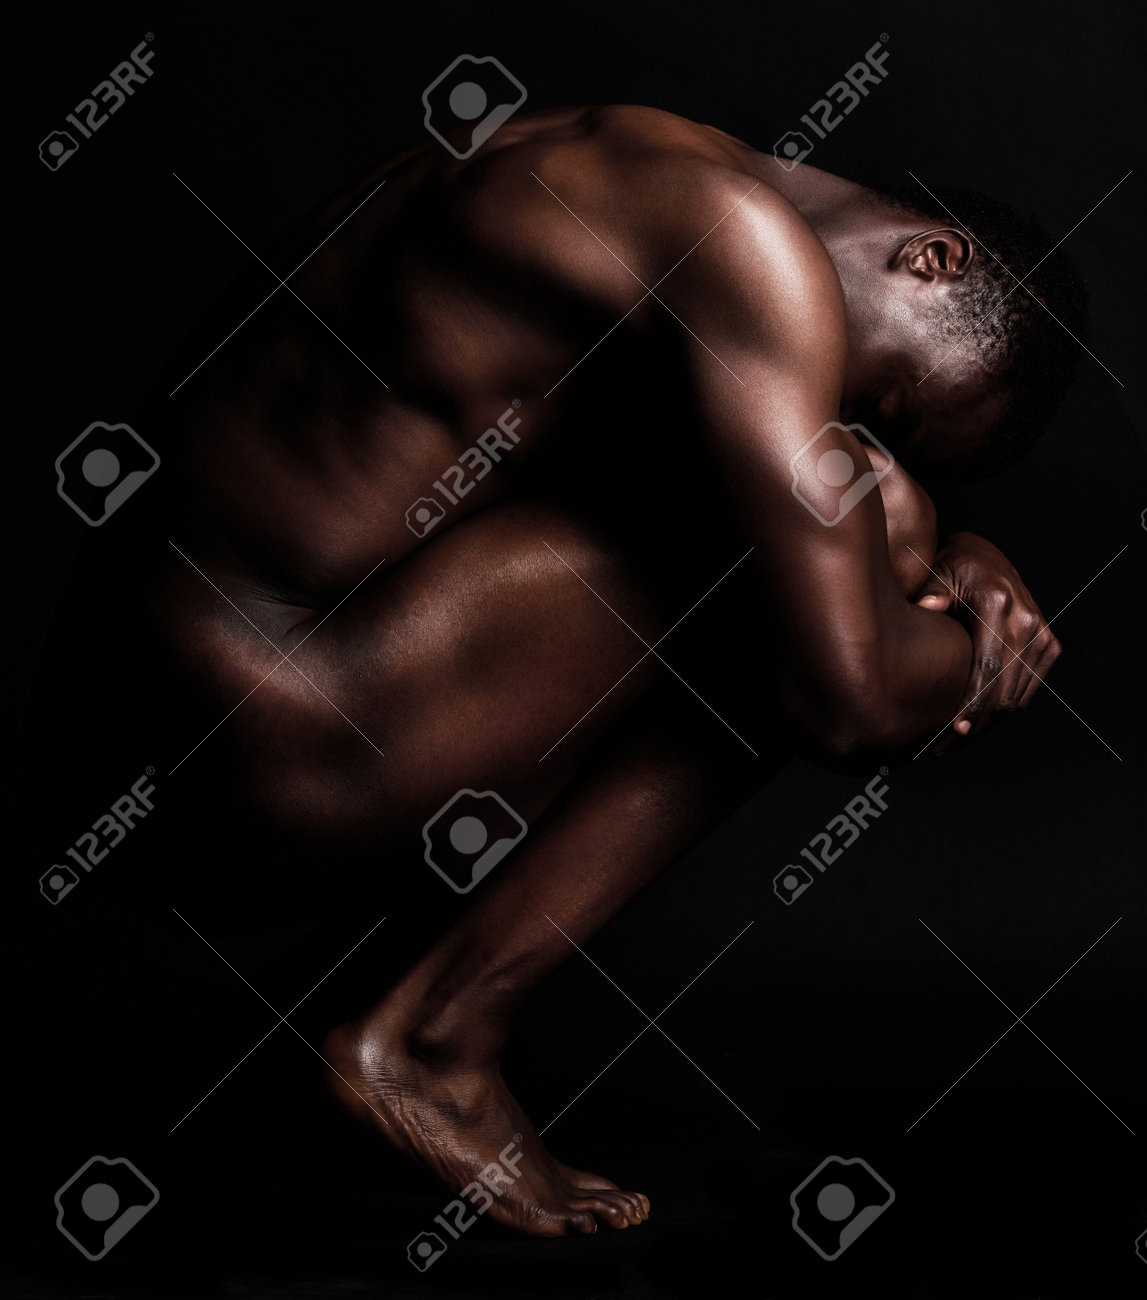 alec bader share nude black male bodybuilders photos